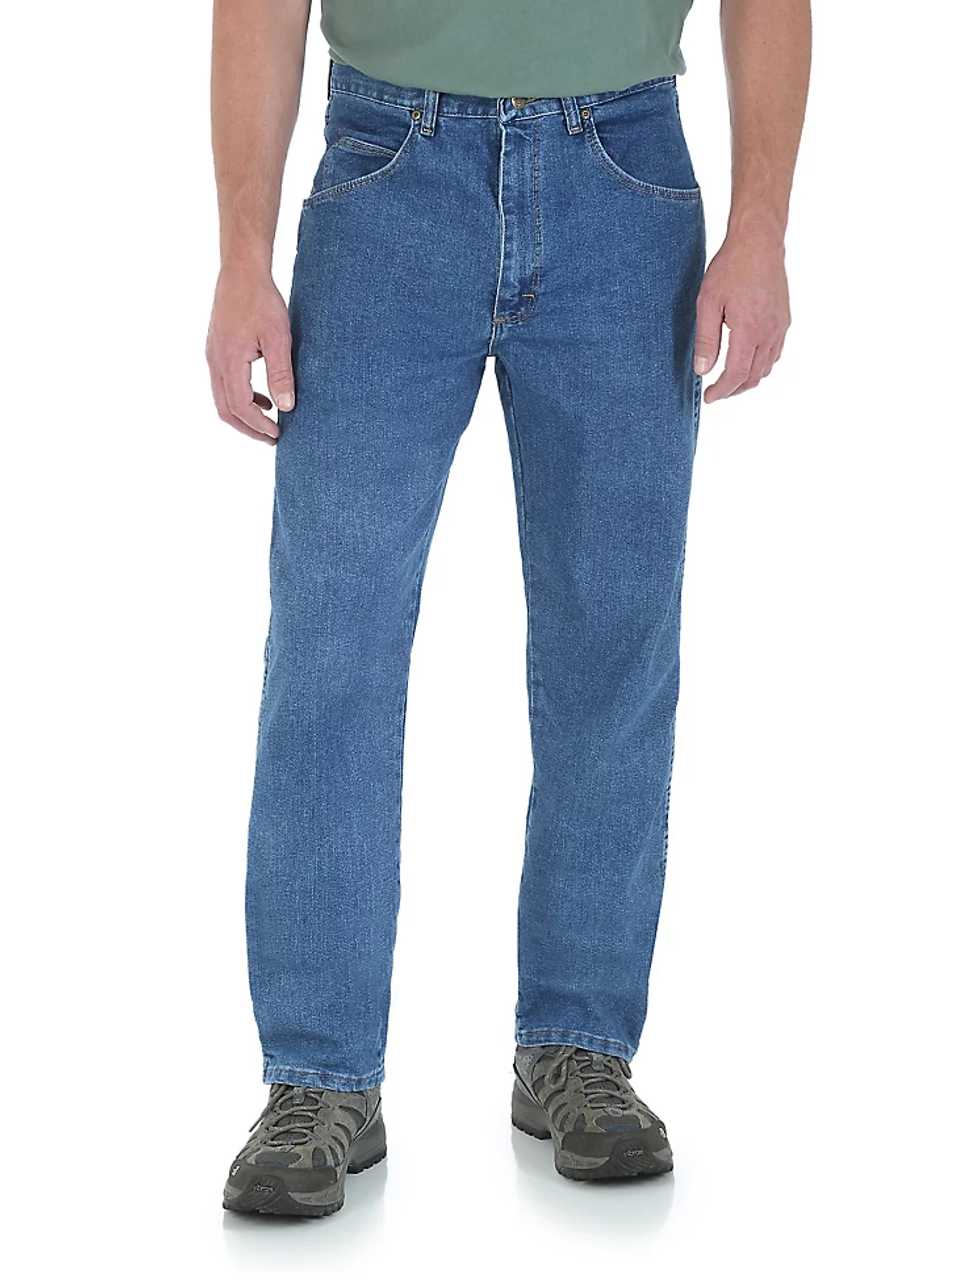 Wrangler™ Men's Rugged Wear® Relaxed Stretch Flex Denim Jean - Stone Washed